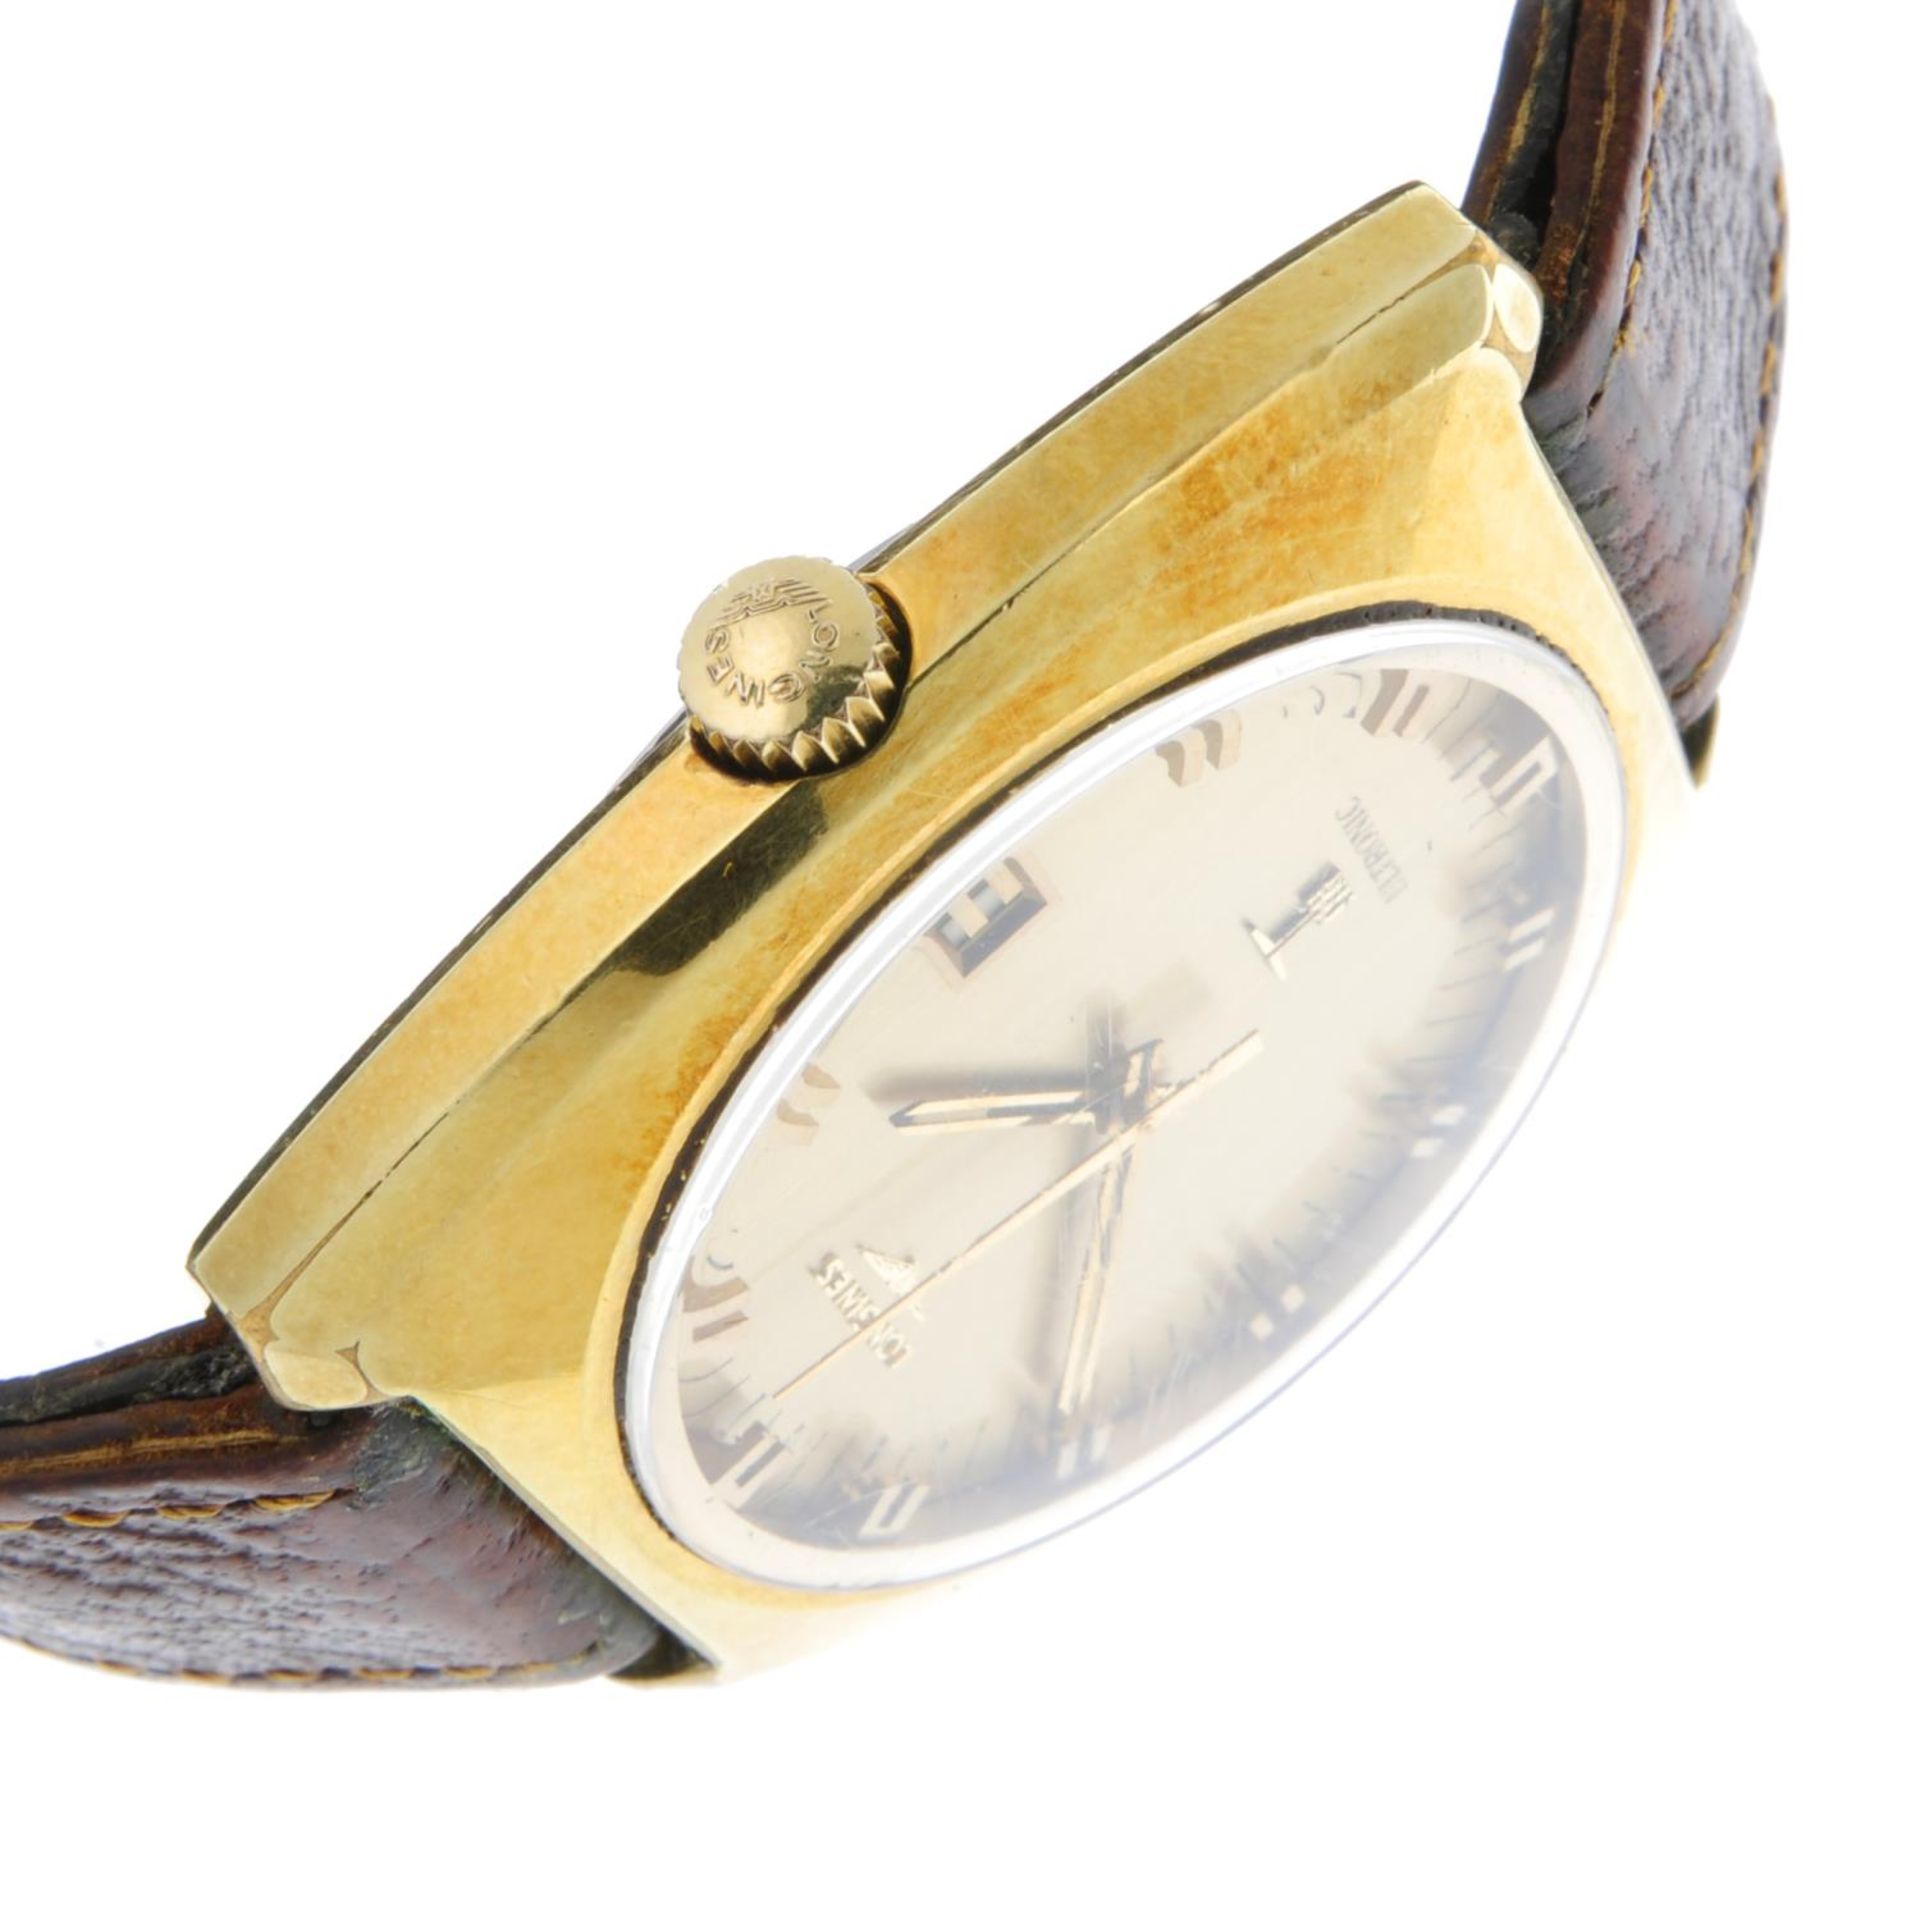 LONGINES - a gentleman's Ultronic wrist watch. - Image 3 of 4